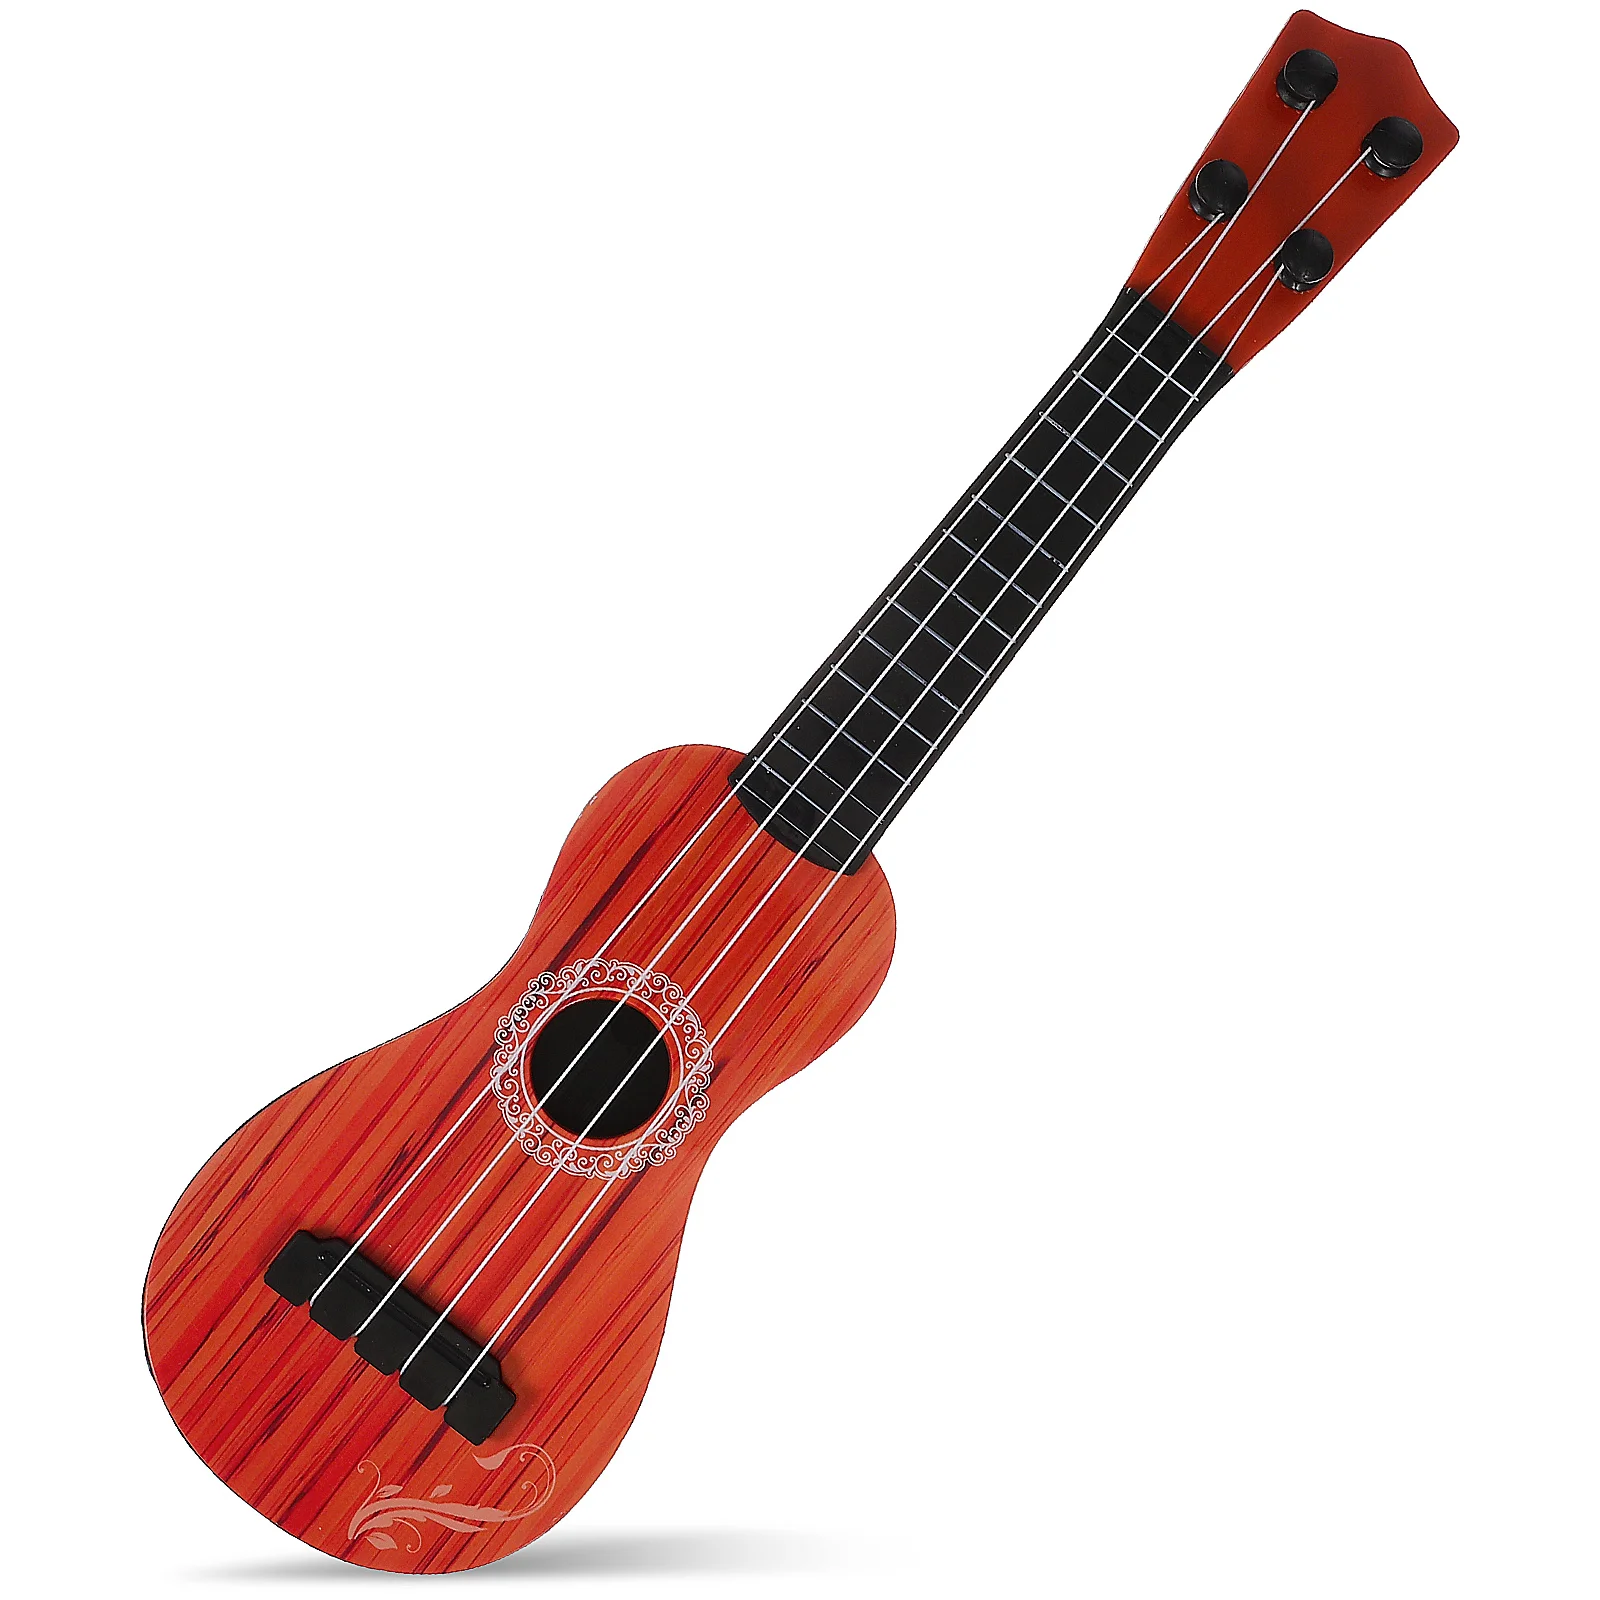 

Ukulele Music Instrument Ukulele Acoustic Small Guitar Wood Like Grain Ukulele 4 String Guitar Kids Beginners Gift 38Cm 15In